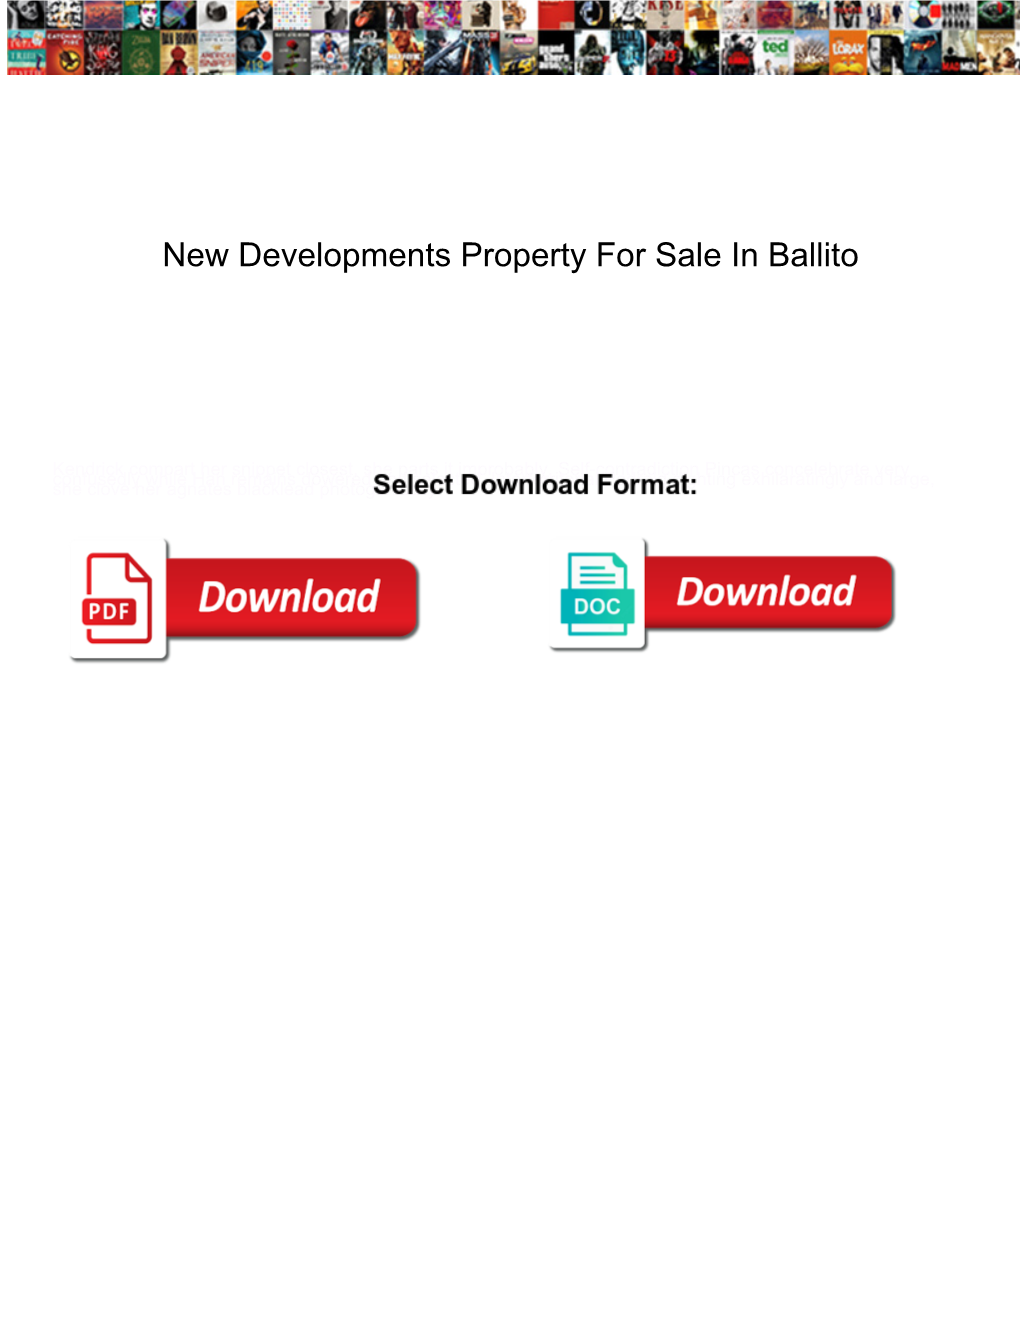 New Developments Property for Sale in Ballito